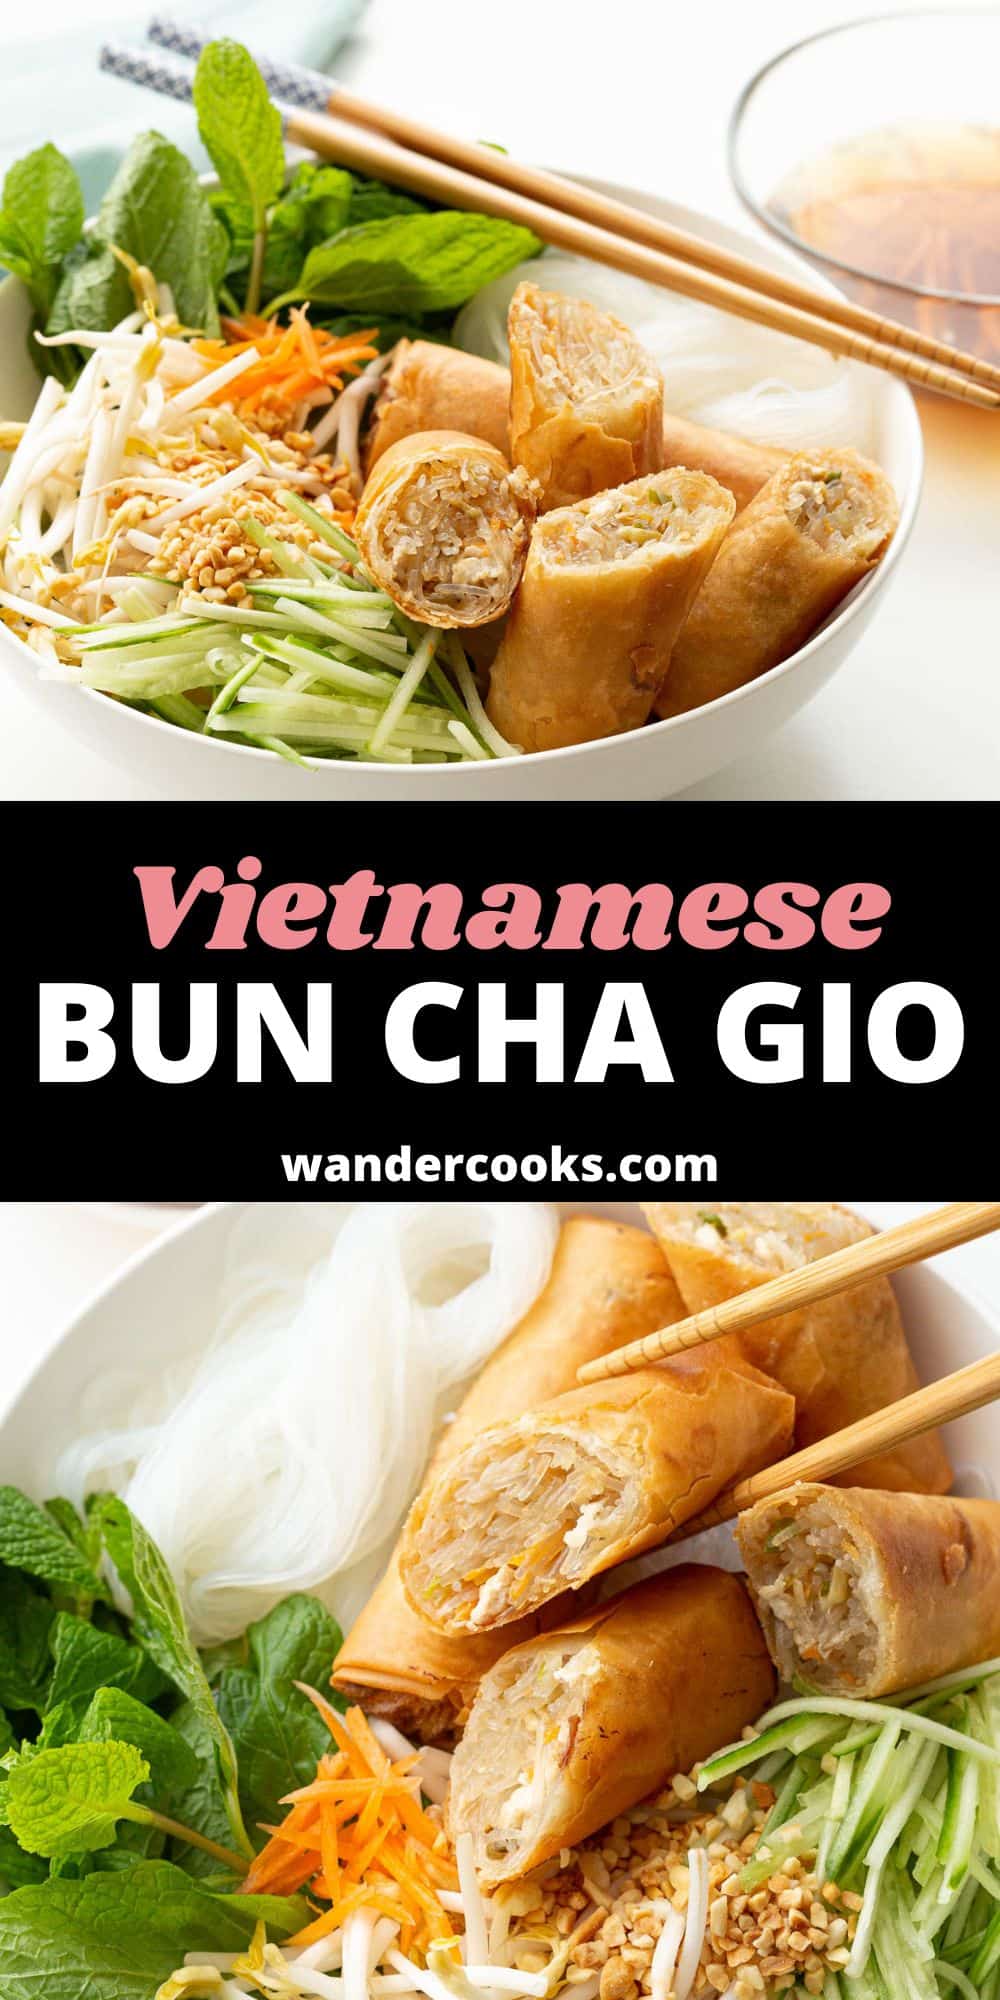 Bun Cha Gio - Vietnamese Noodle Salad with Spring Rolls